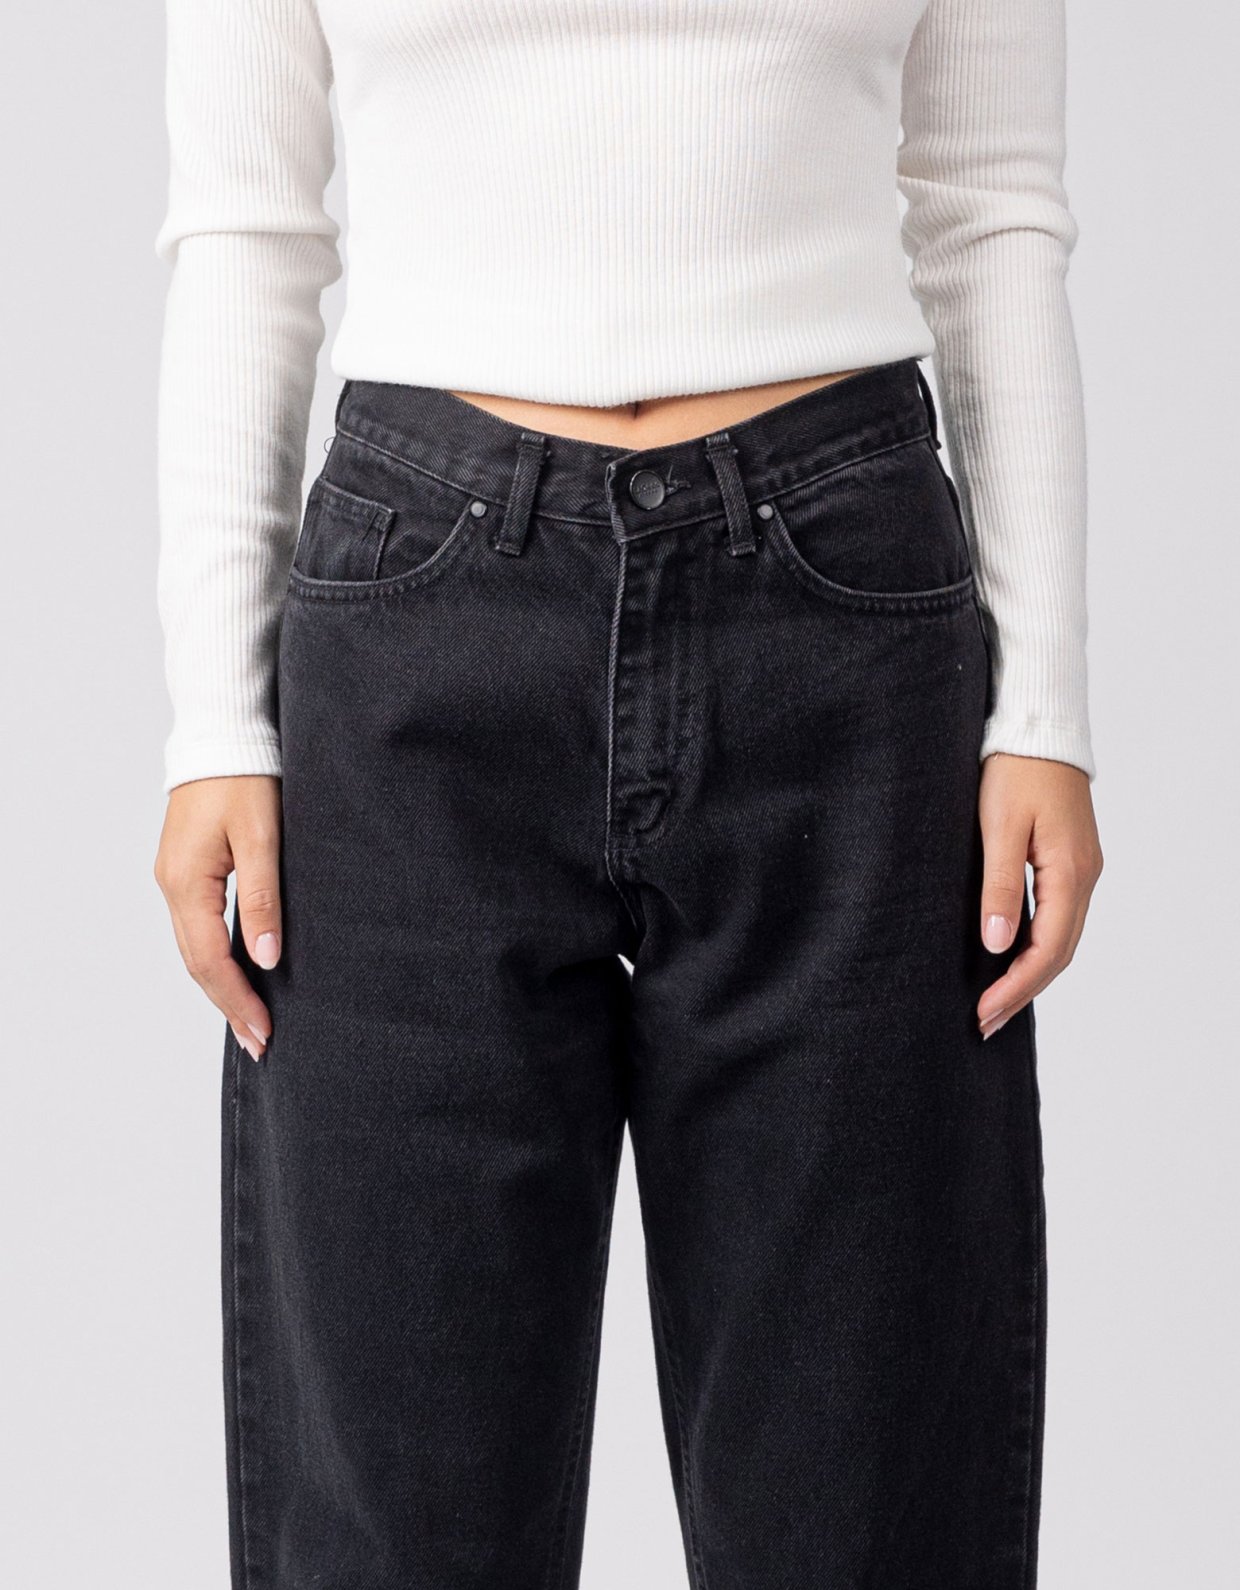 Sac & CO Jeans Lima slouchy denim pants black